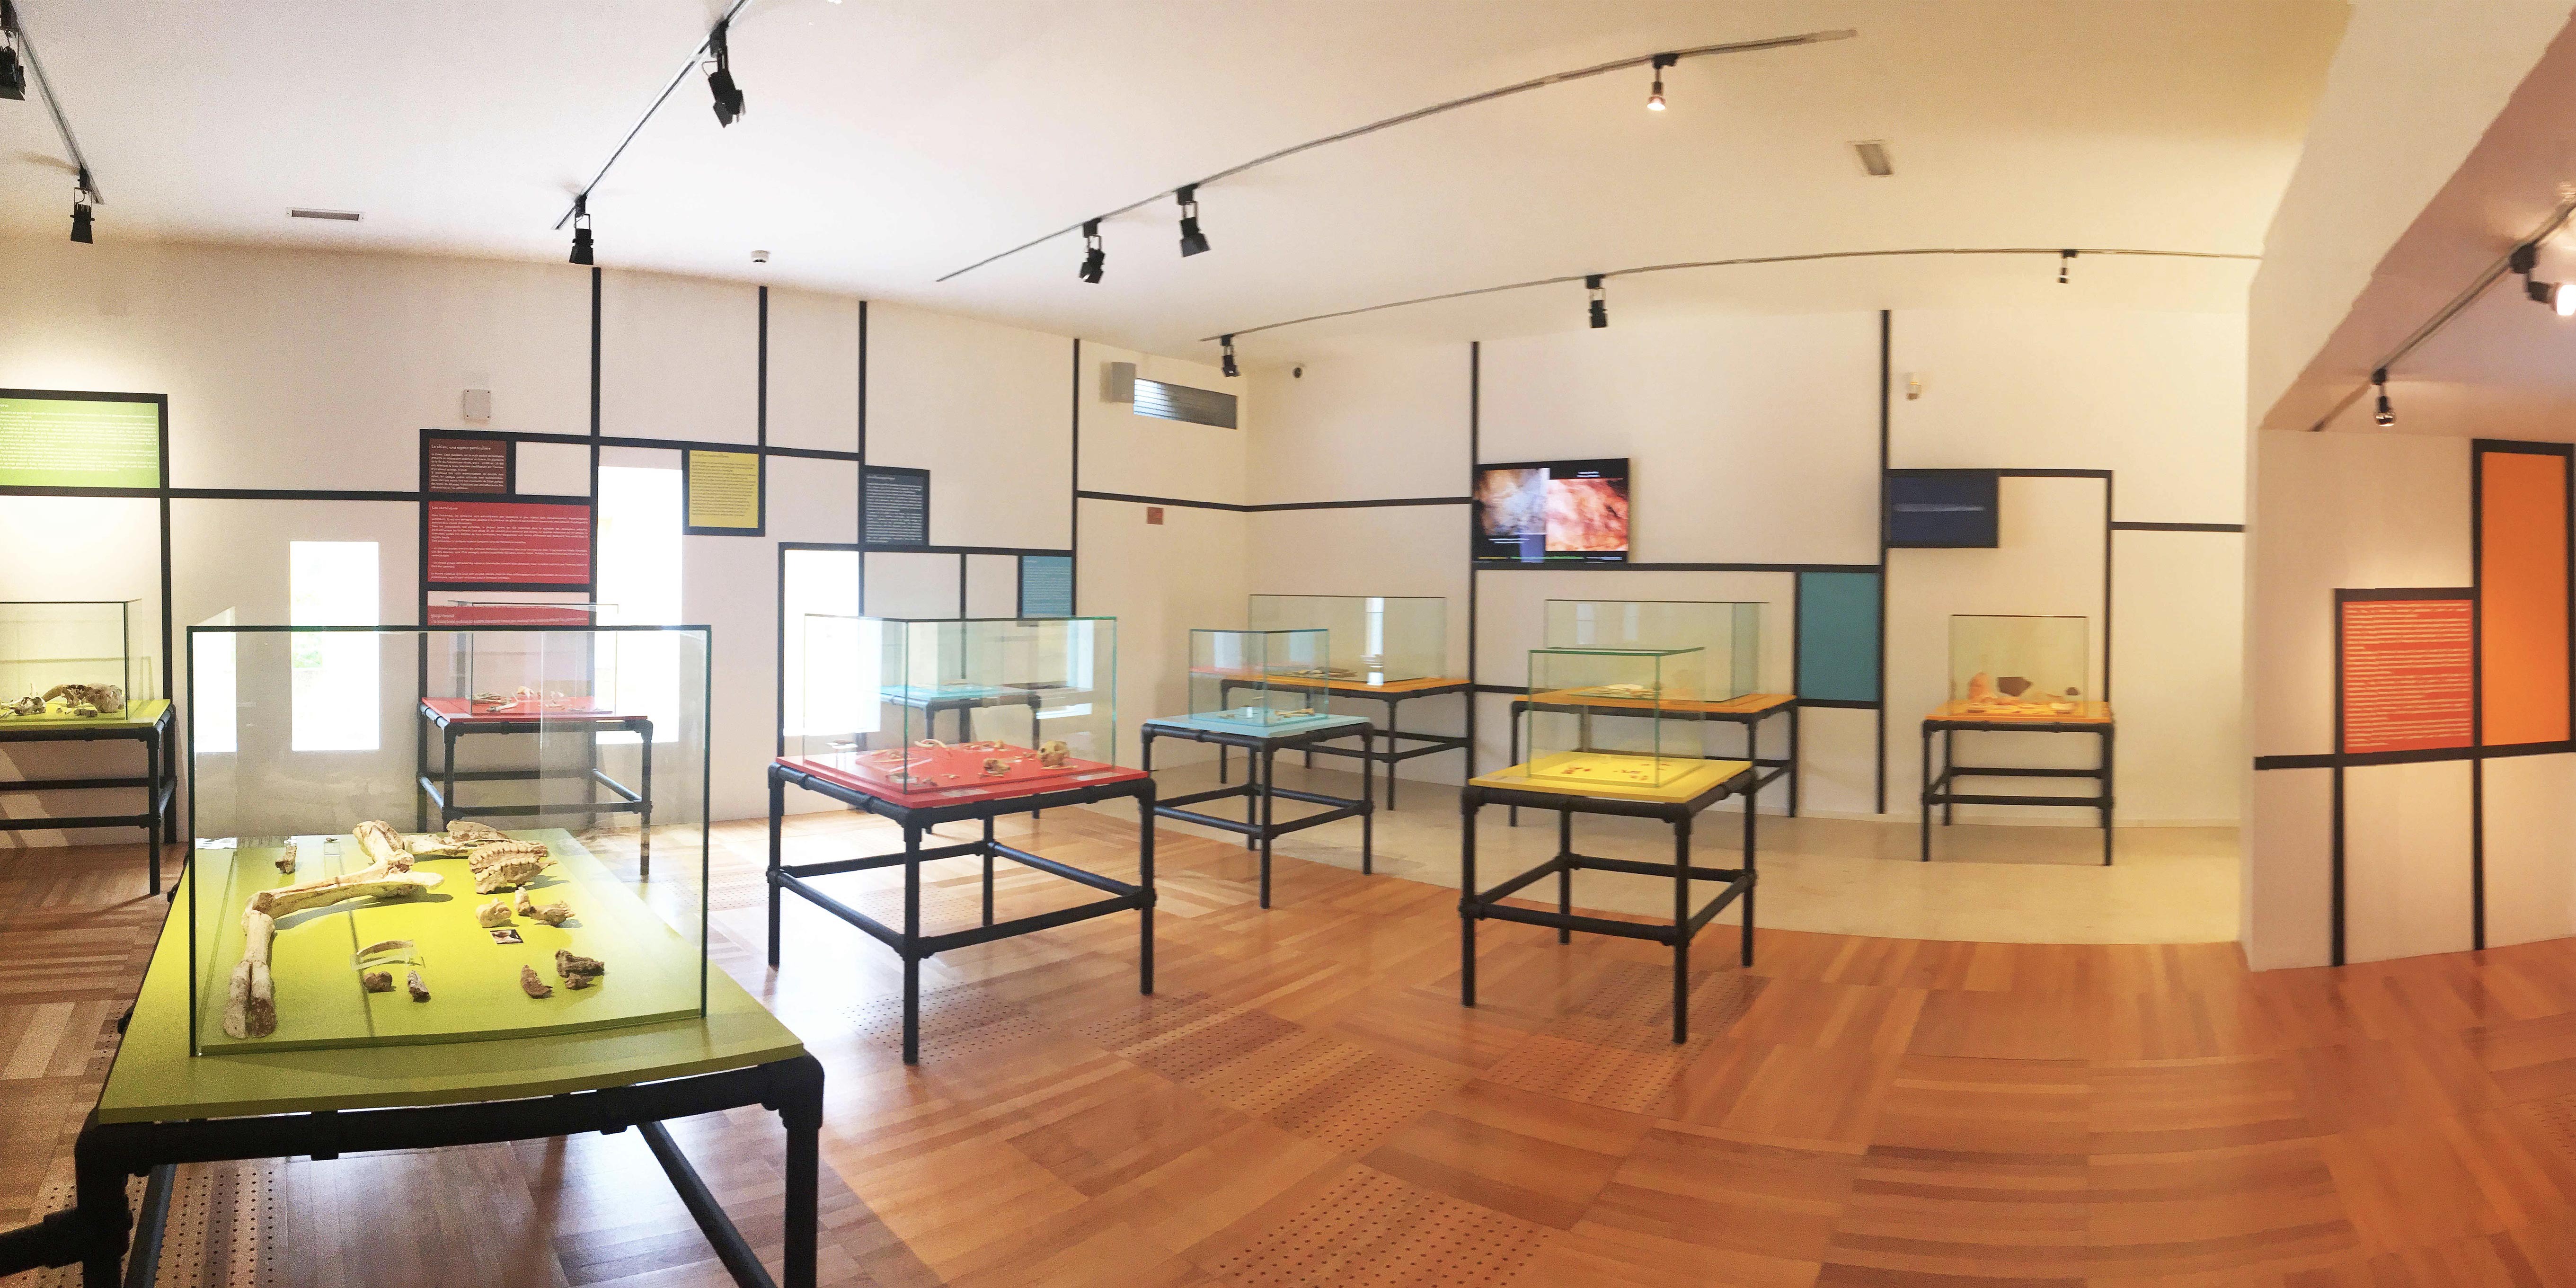 Temporary exhibition room